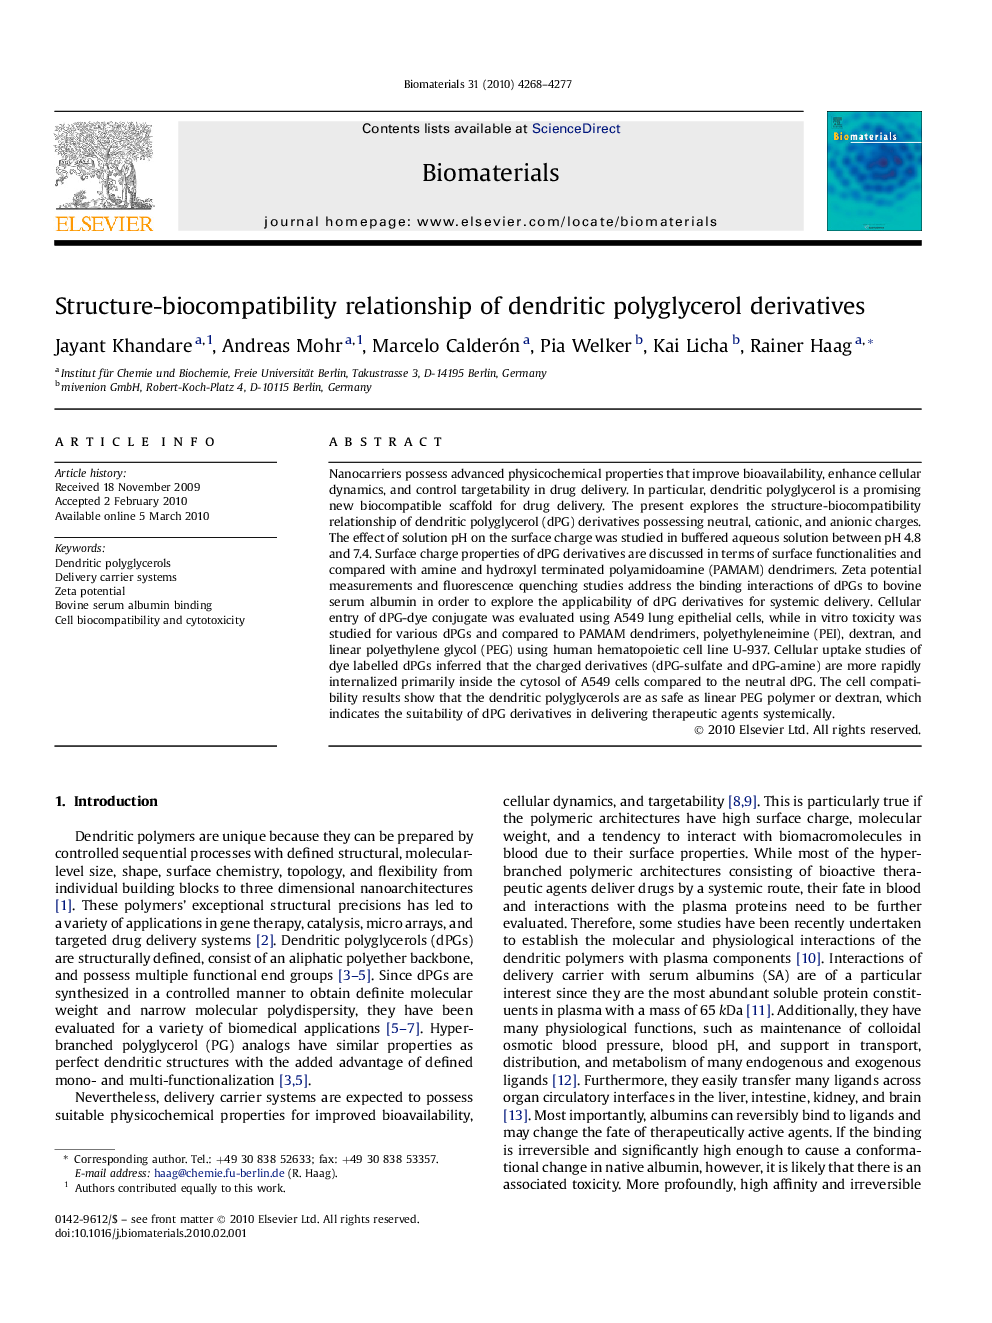 Structure-biocompatibility relationship of dendritic polyglycerol derivatives